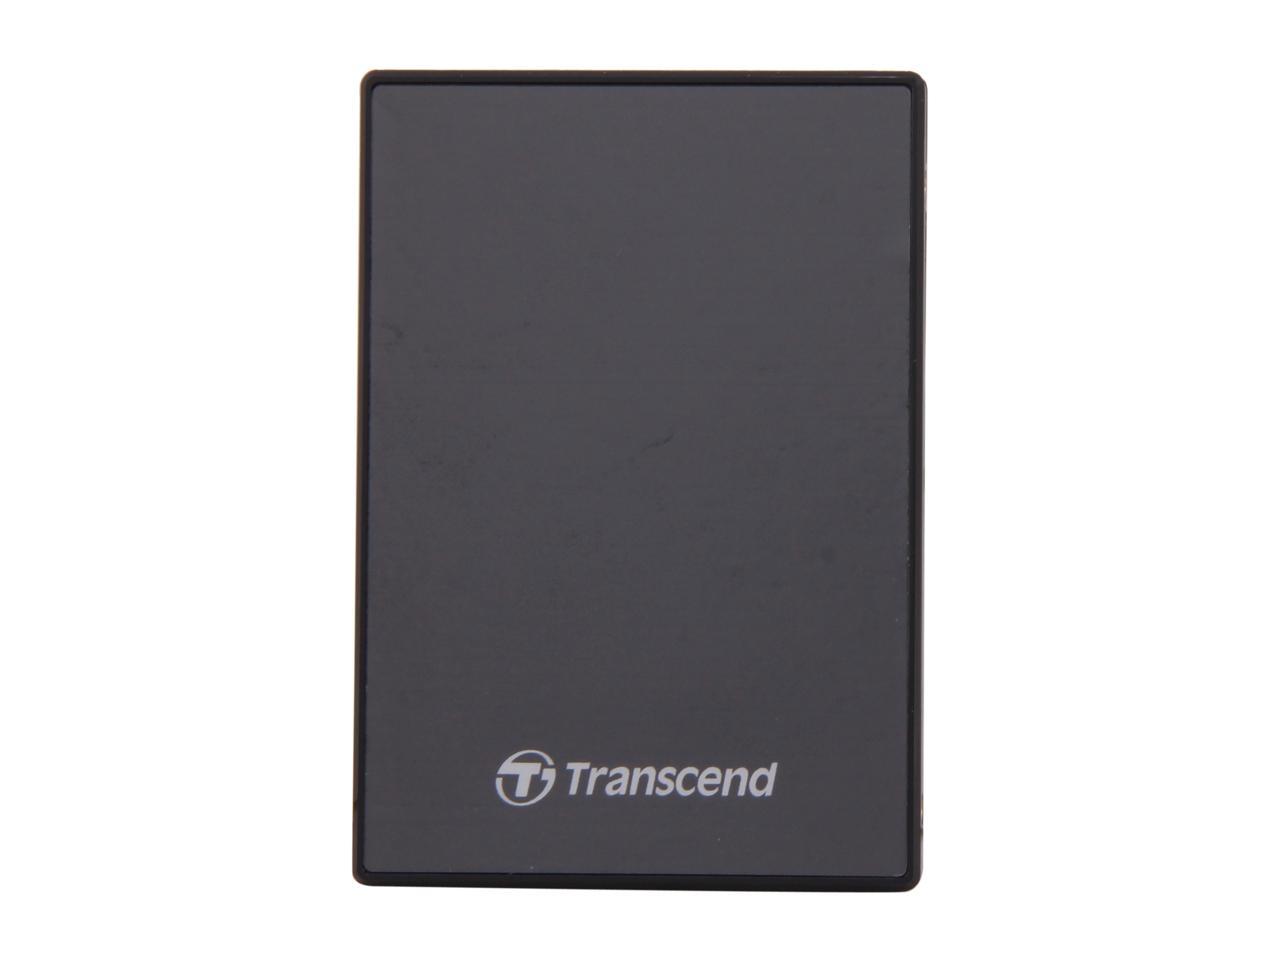 Transcend 2.5" 64GB PATA MLC Internal Solid State Drive (SSD) TS64GPSD330